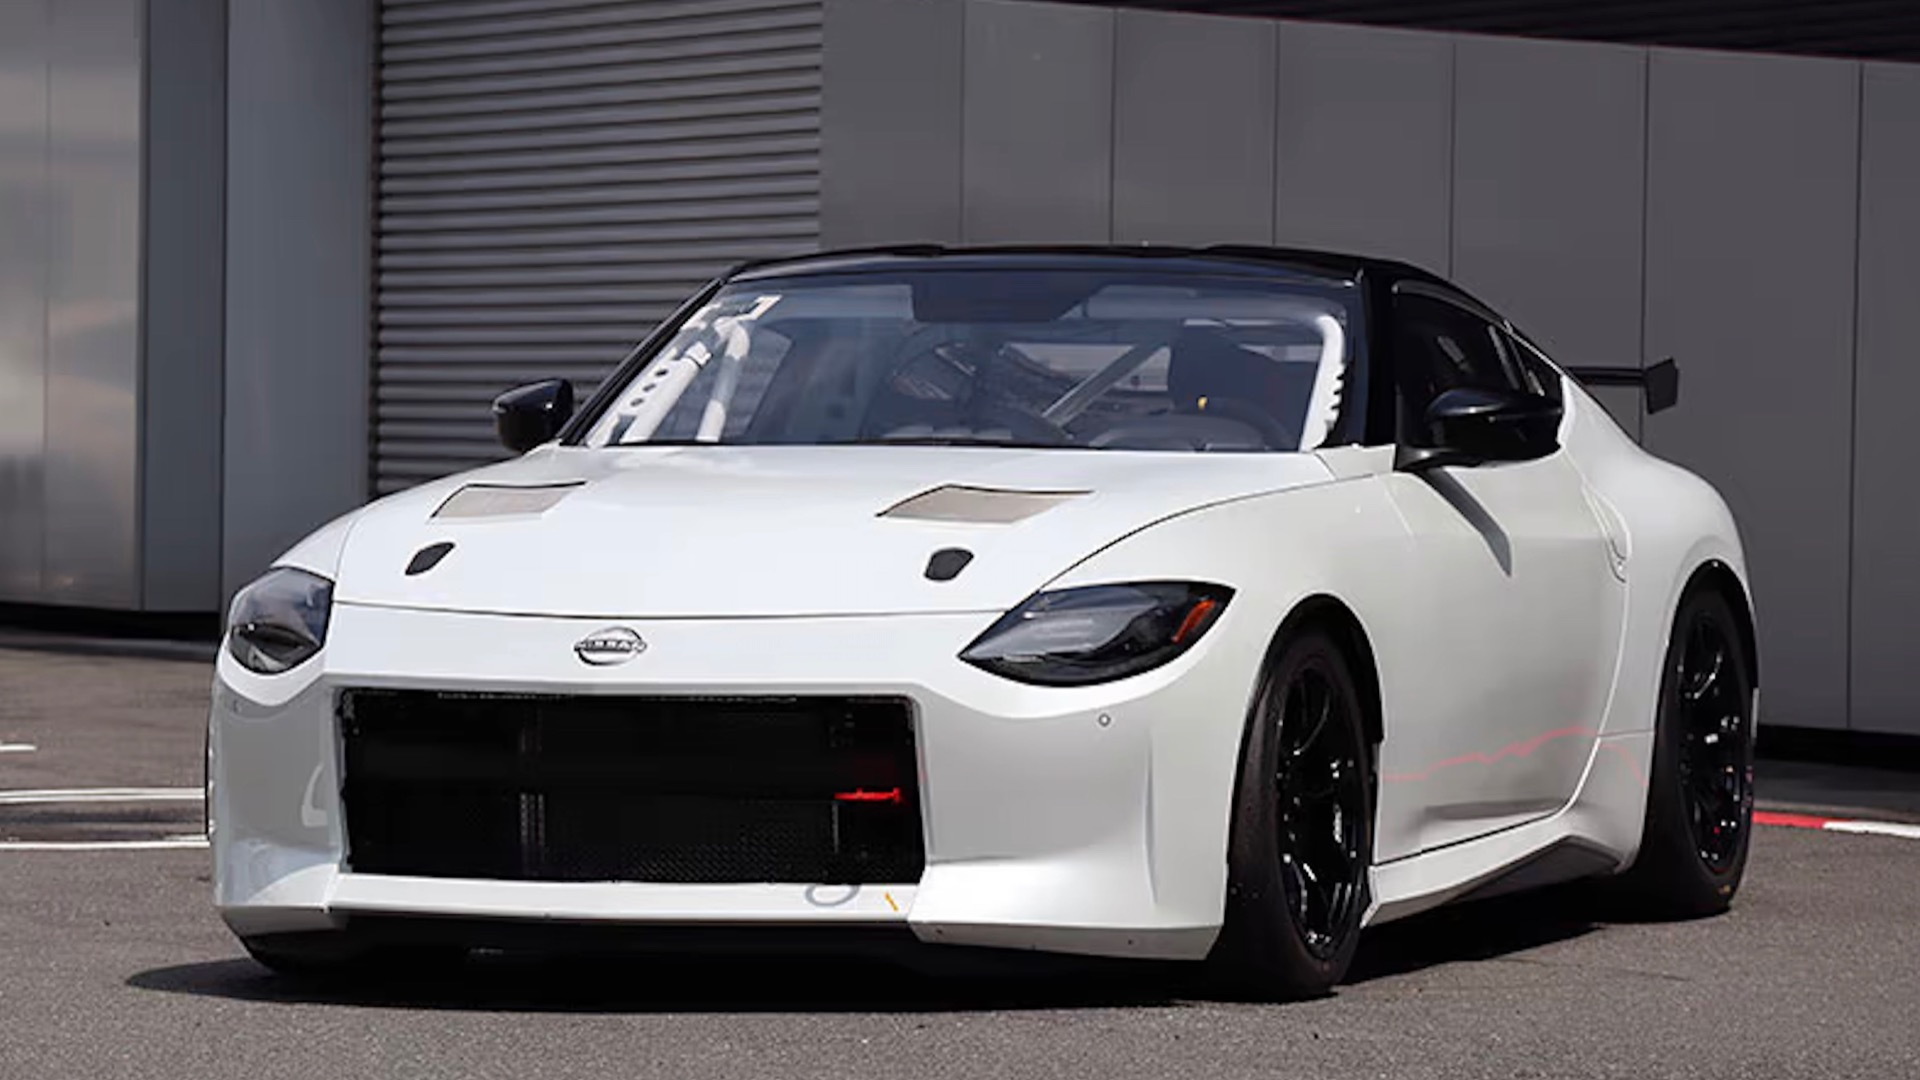 Nissan Z race car for 2022 Fuji 24 Hours